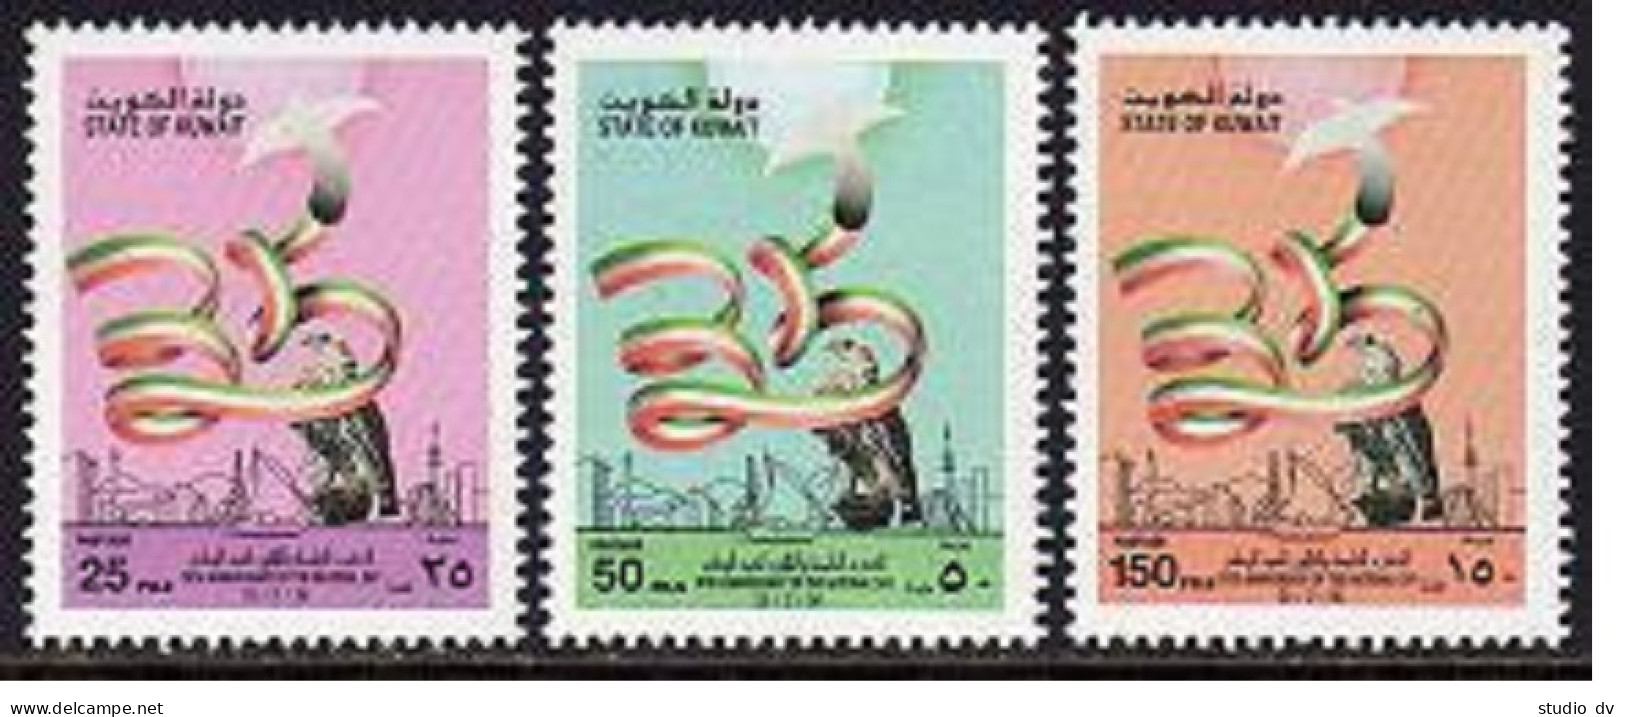 Kuwait 1303-1305, MNH. Michel 1444-1446. 35th National Day, 1996. Birds. - Koweït